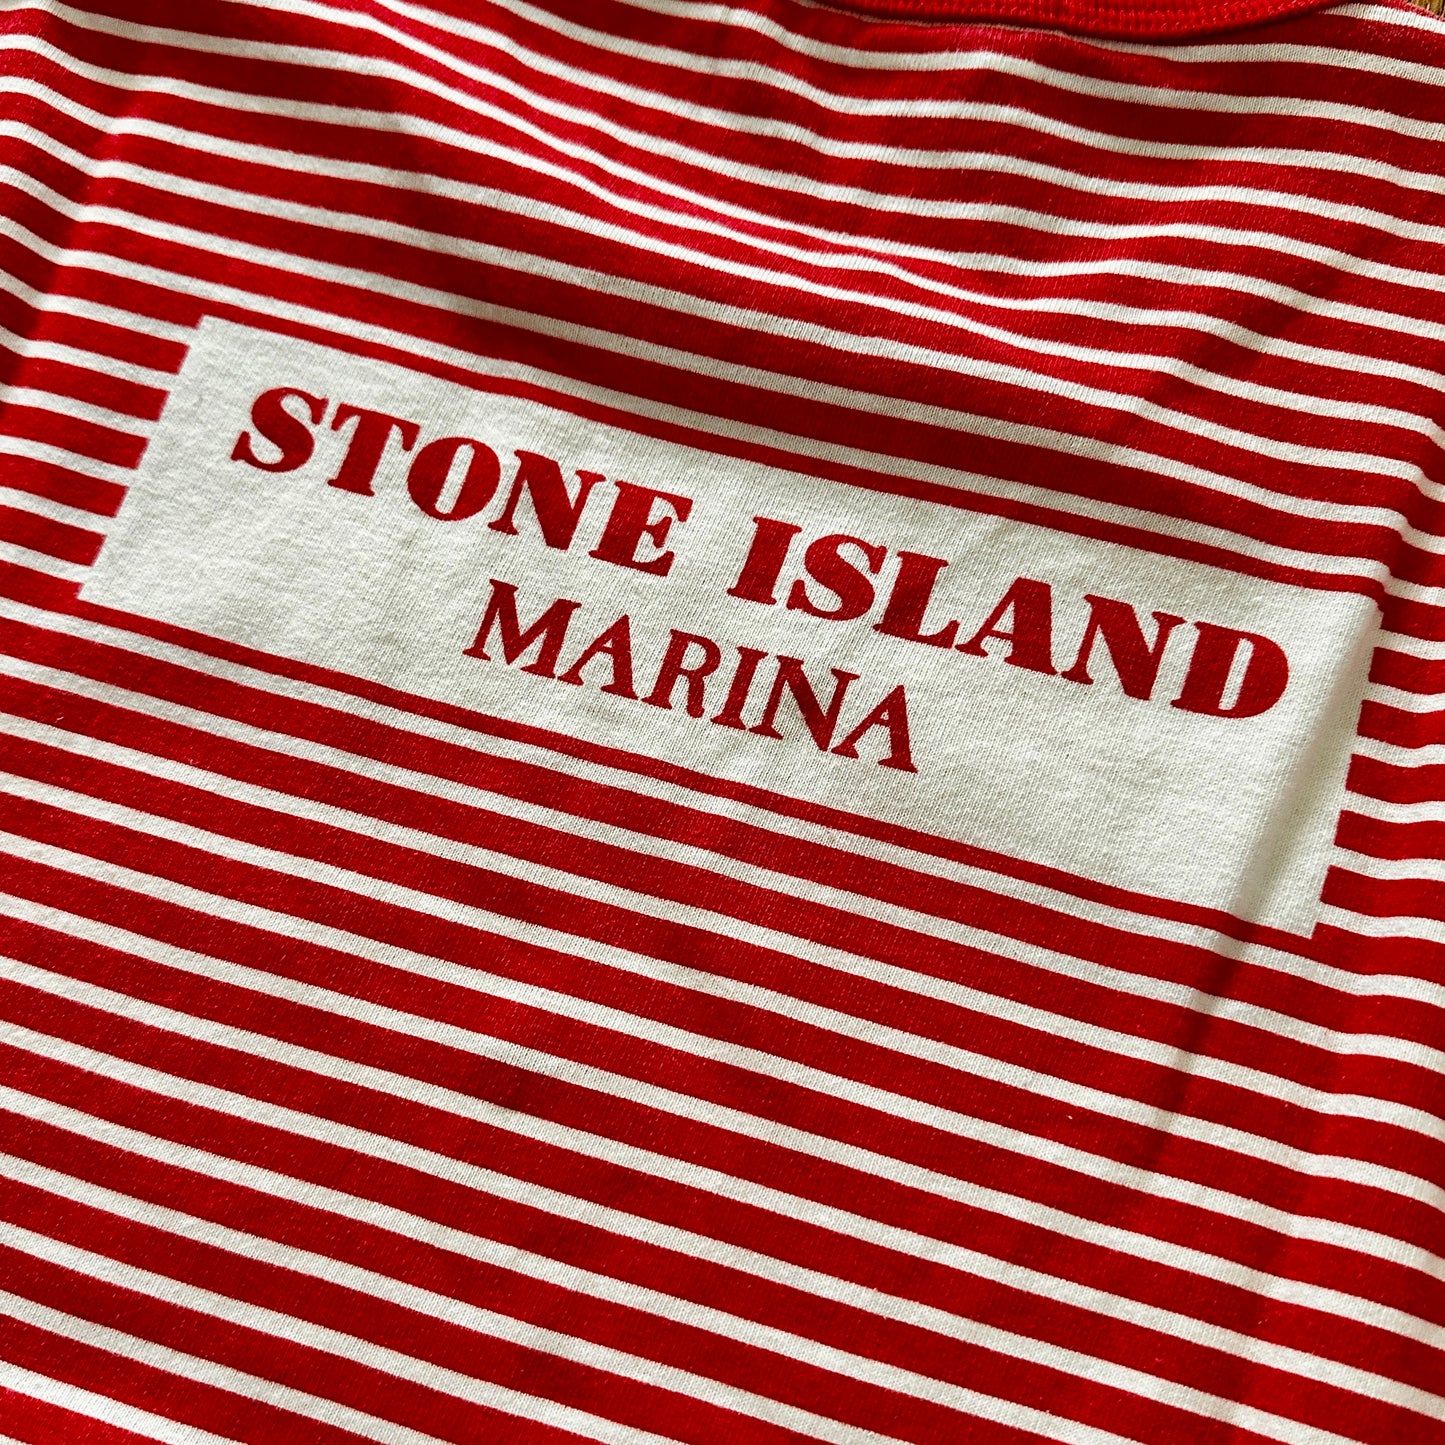 Stone Island Marina 2019 Red Longsleeve T-Shirt - M